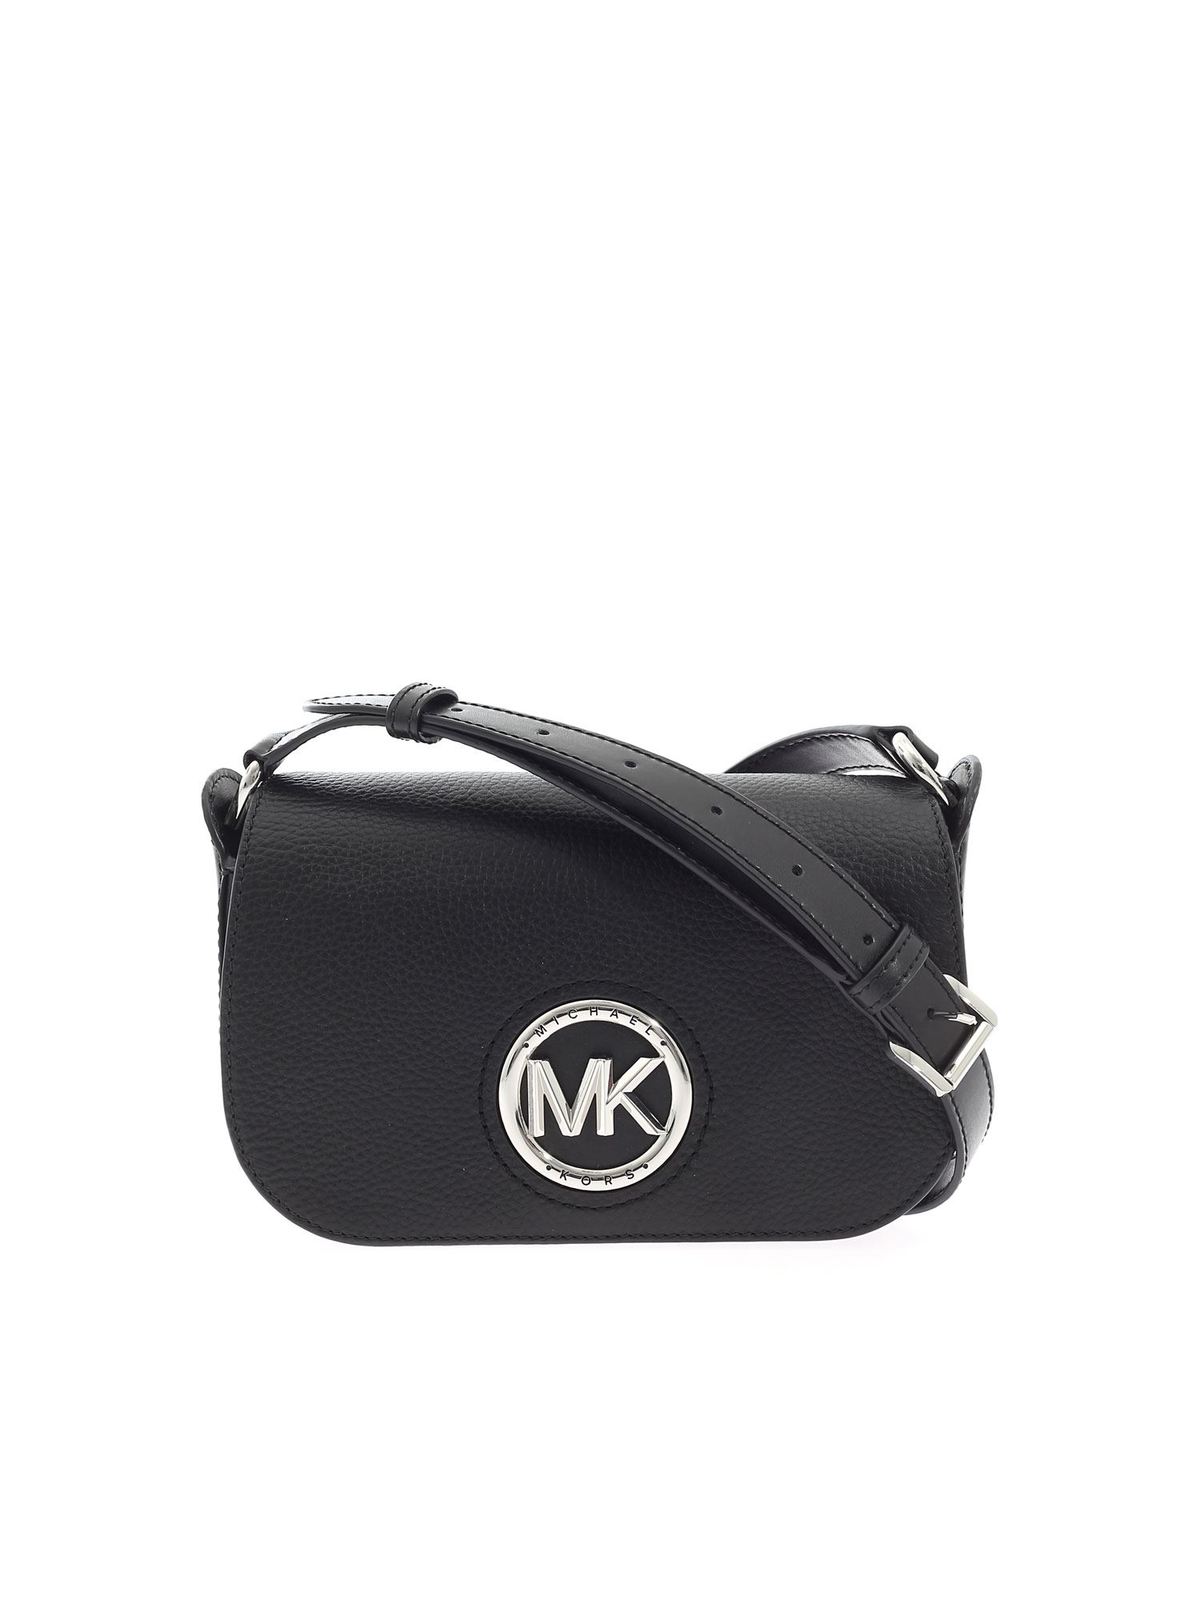 crossbody mk bag black